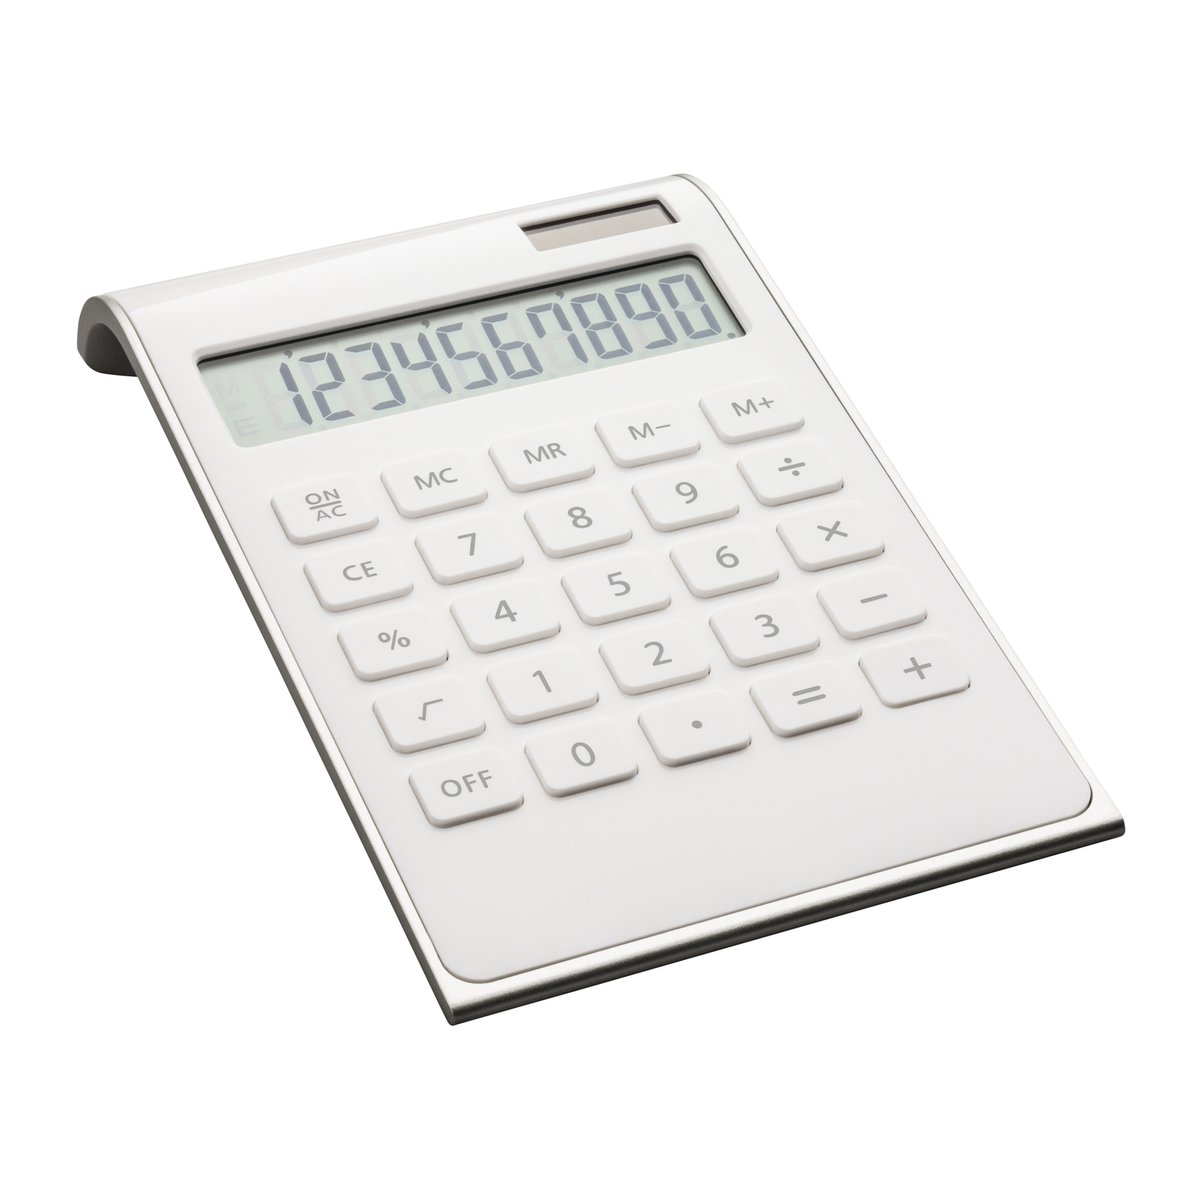 Solar calculator REEVES-VALINDA white/silver